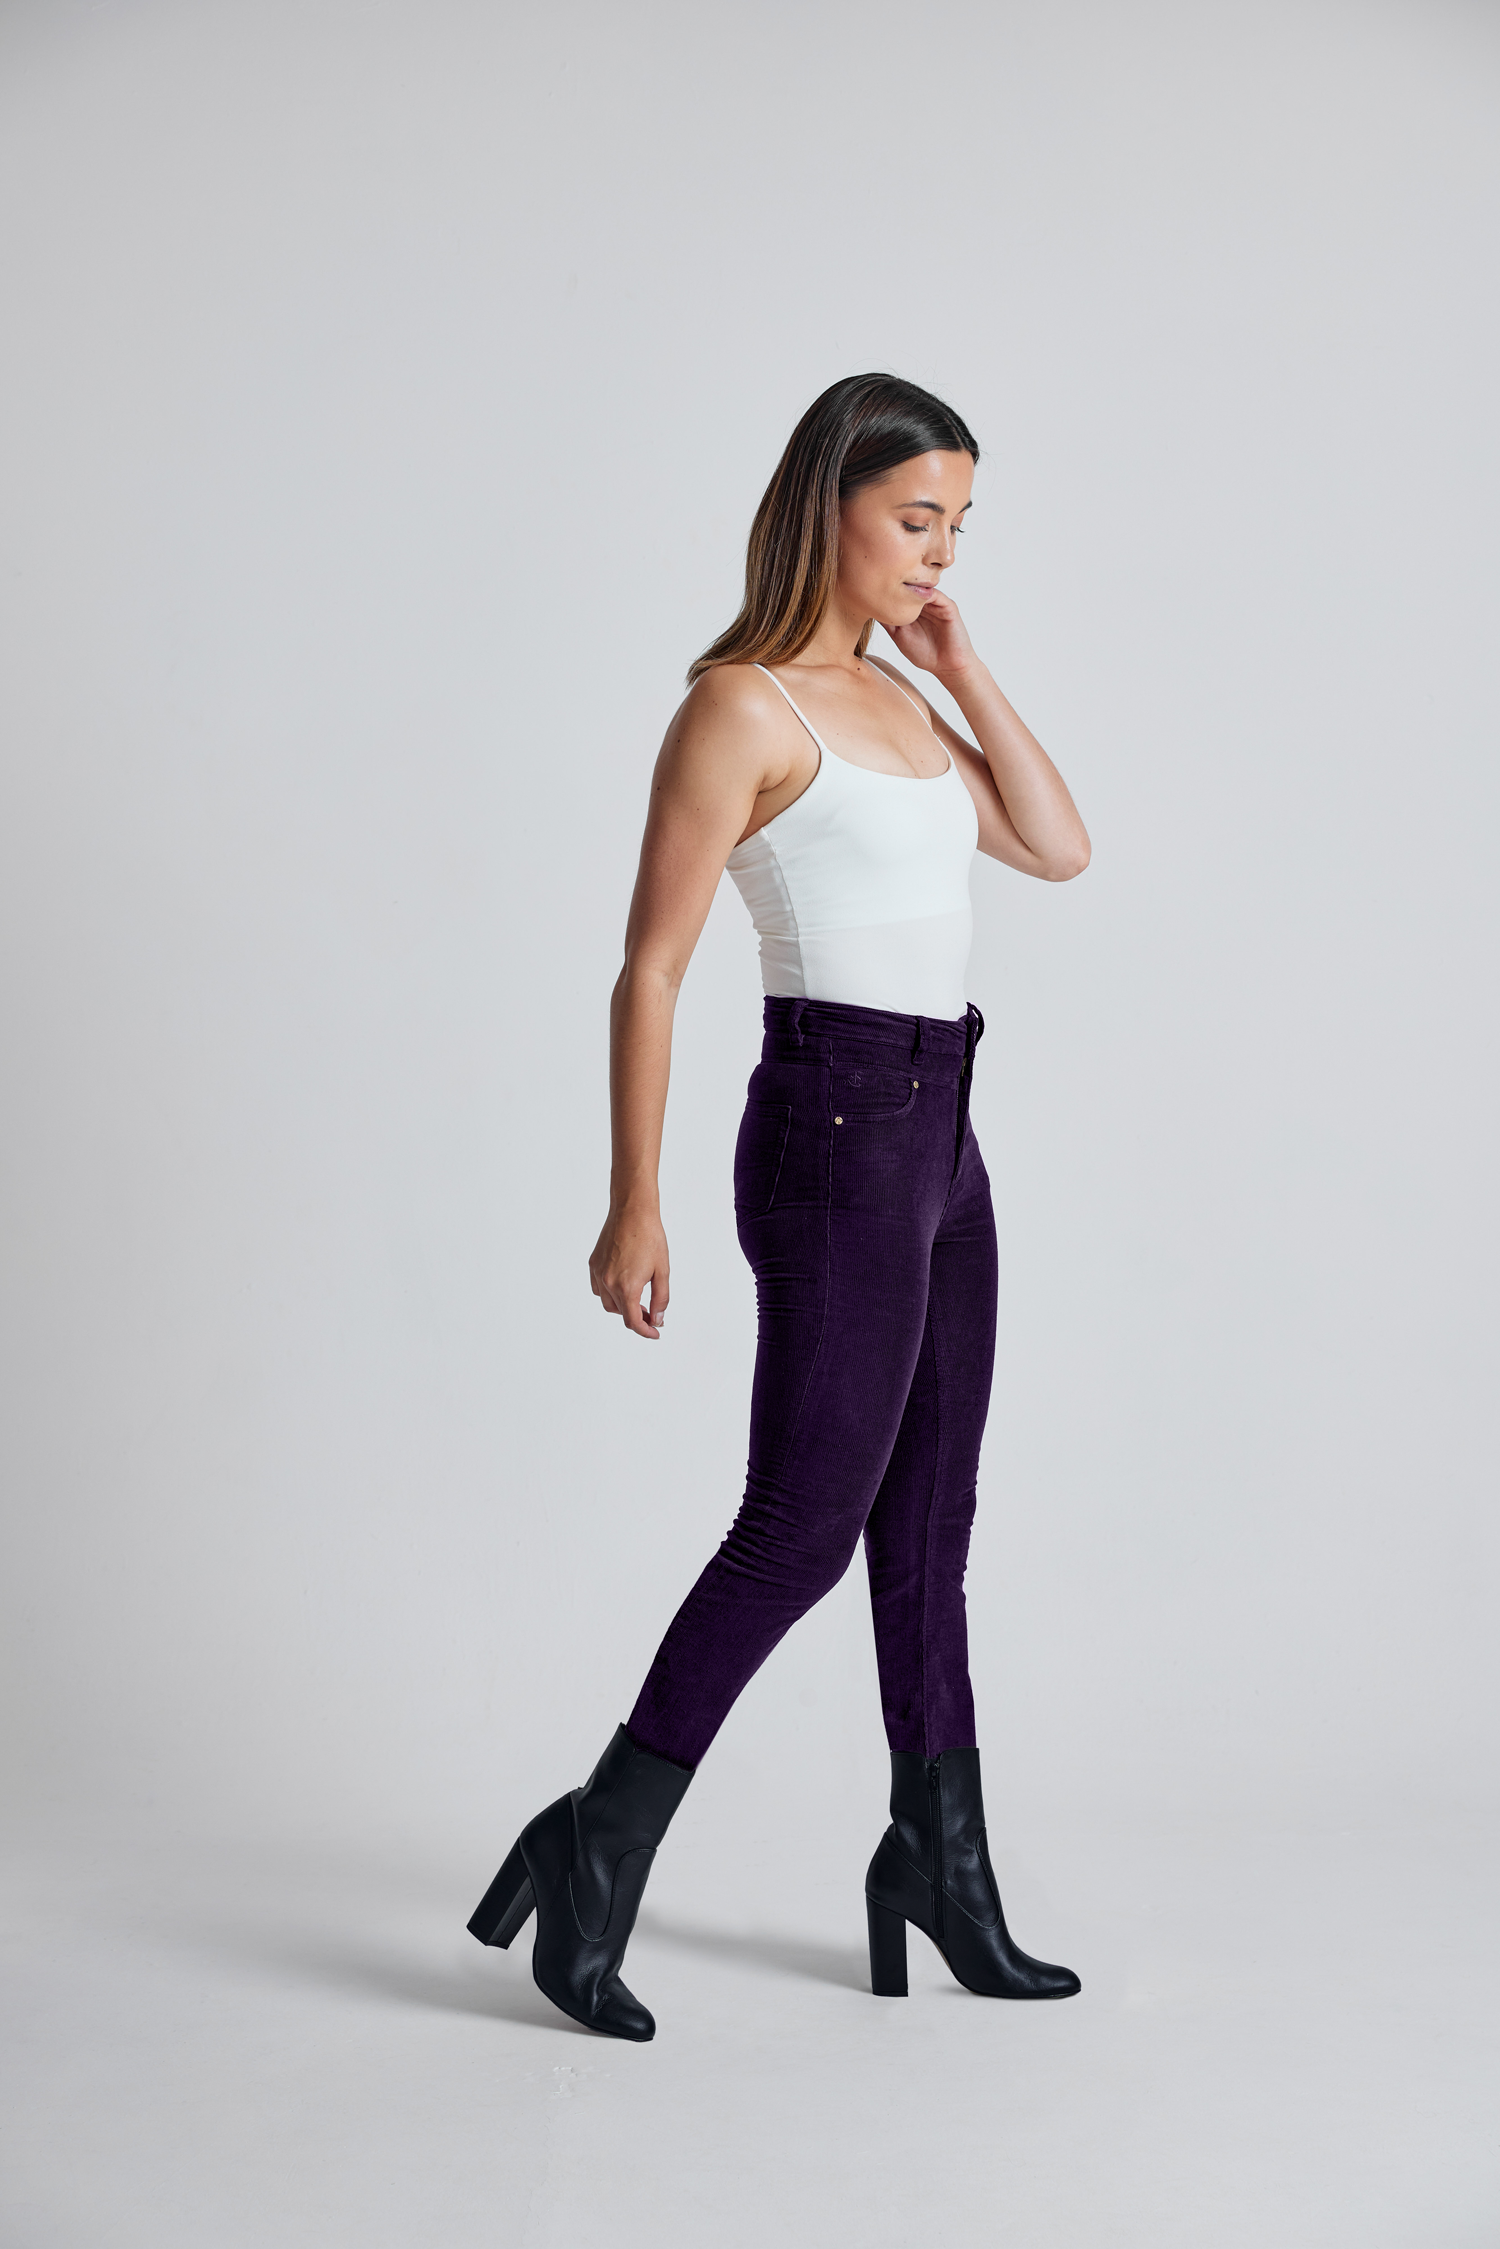 NINA Aubergine - GOTS Organic Cotton Cord High Waist Skinny Jean by Flax & Loo, 29" / Long